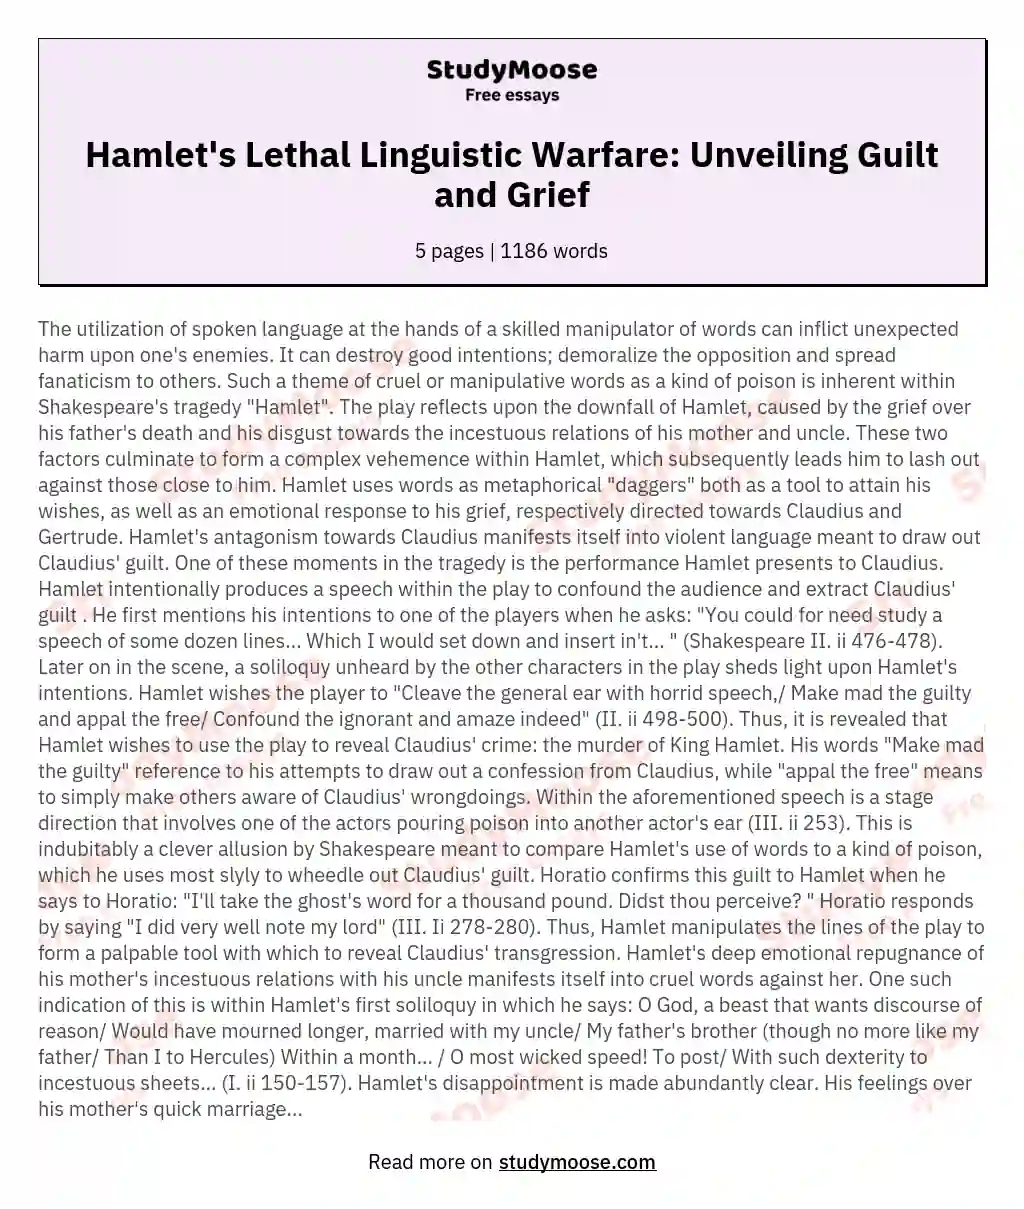 Hamlet's Lethal Linguistic Warfare: Unveiling Guilt and Grief essay